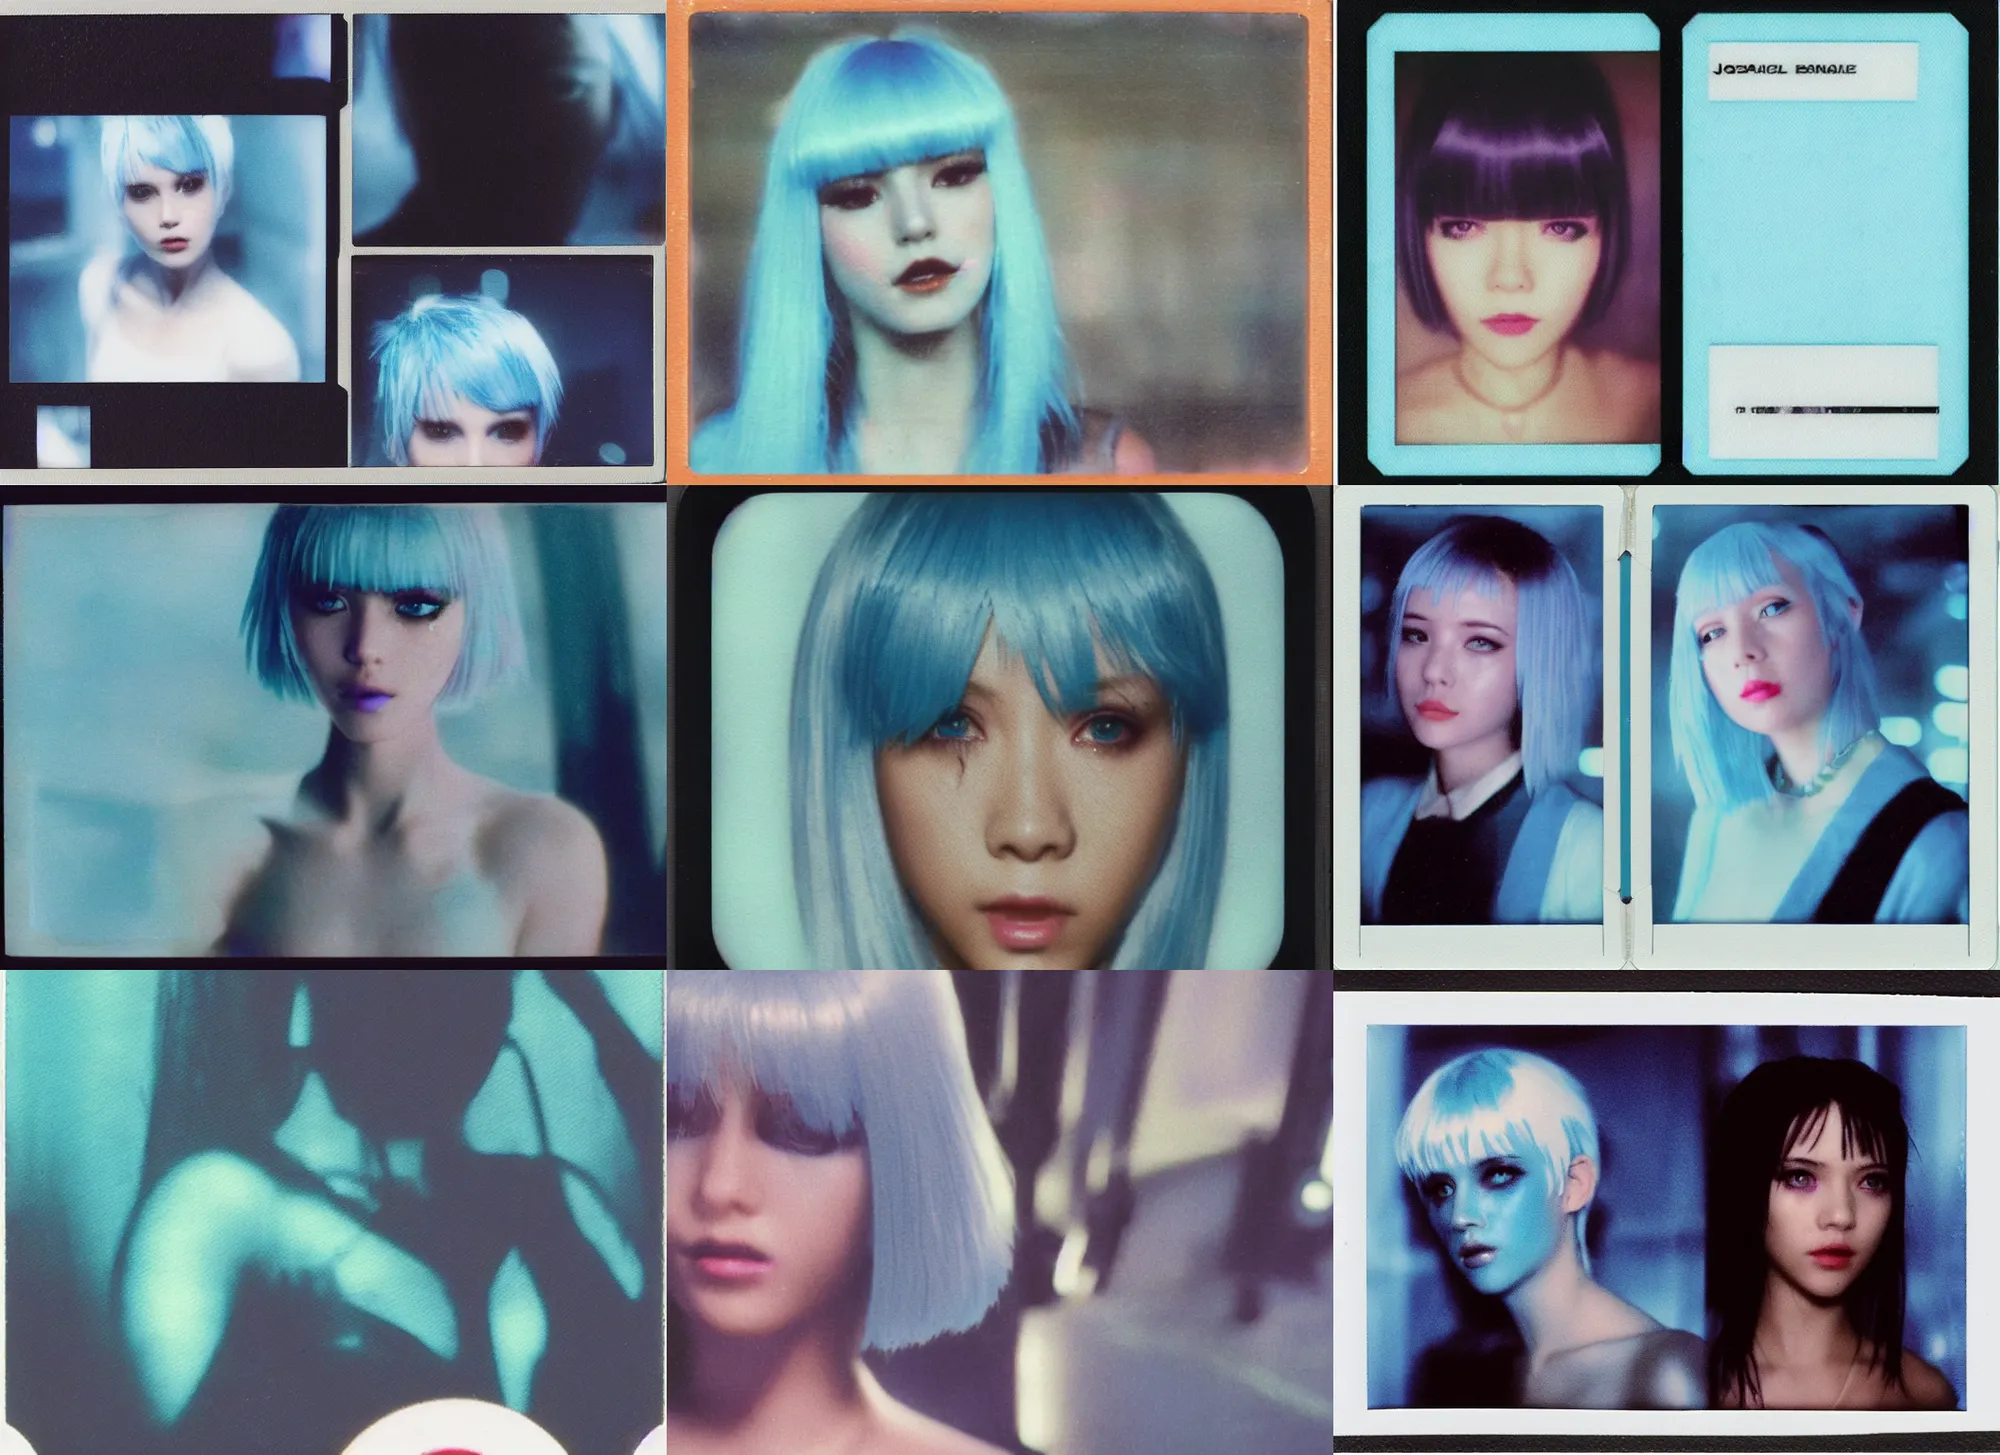 Prompt: an aesthetic polaroid hologram of joi the short light blue haired girl with black eyes from blade runner